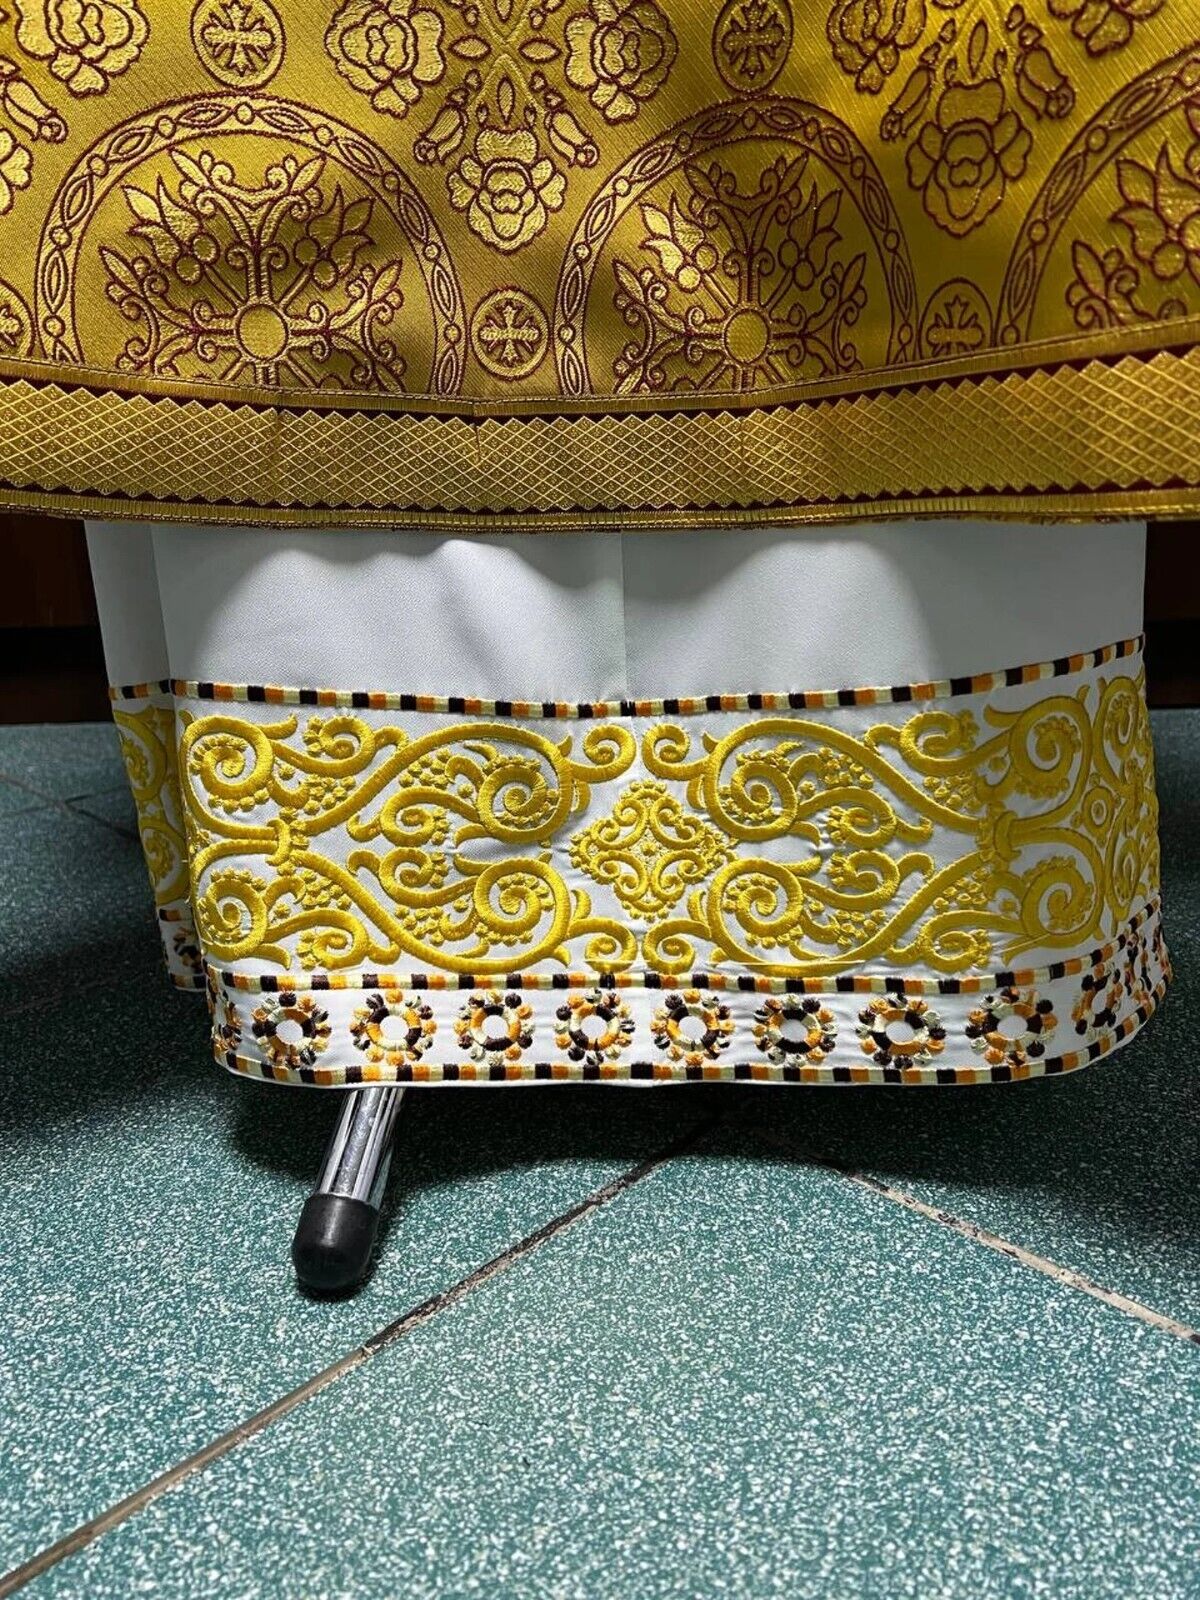 Stykhar with embroidery, podriznik - Orthodox vestments of a priest